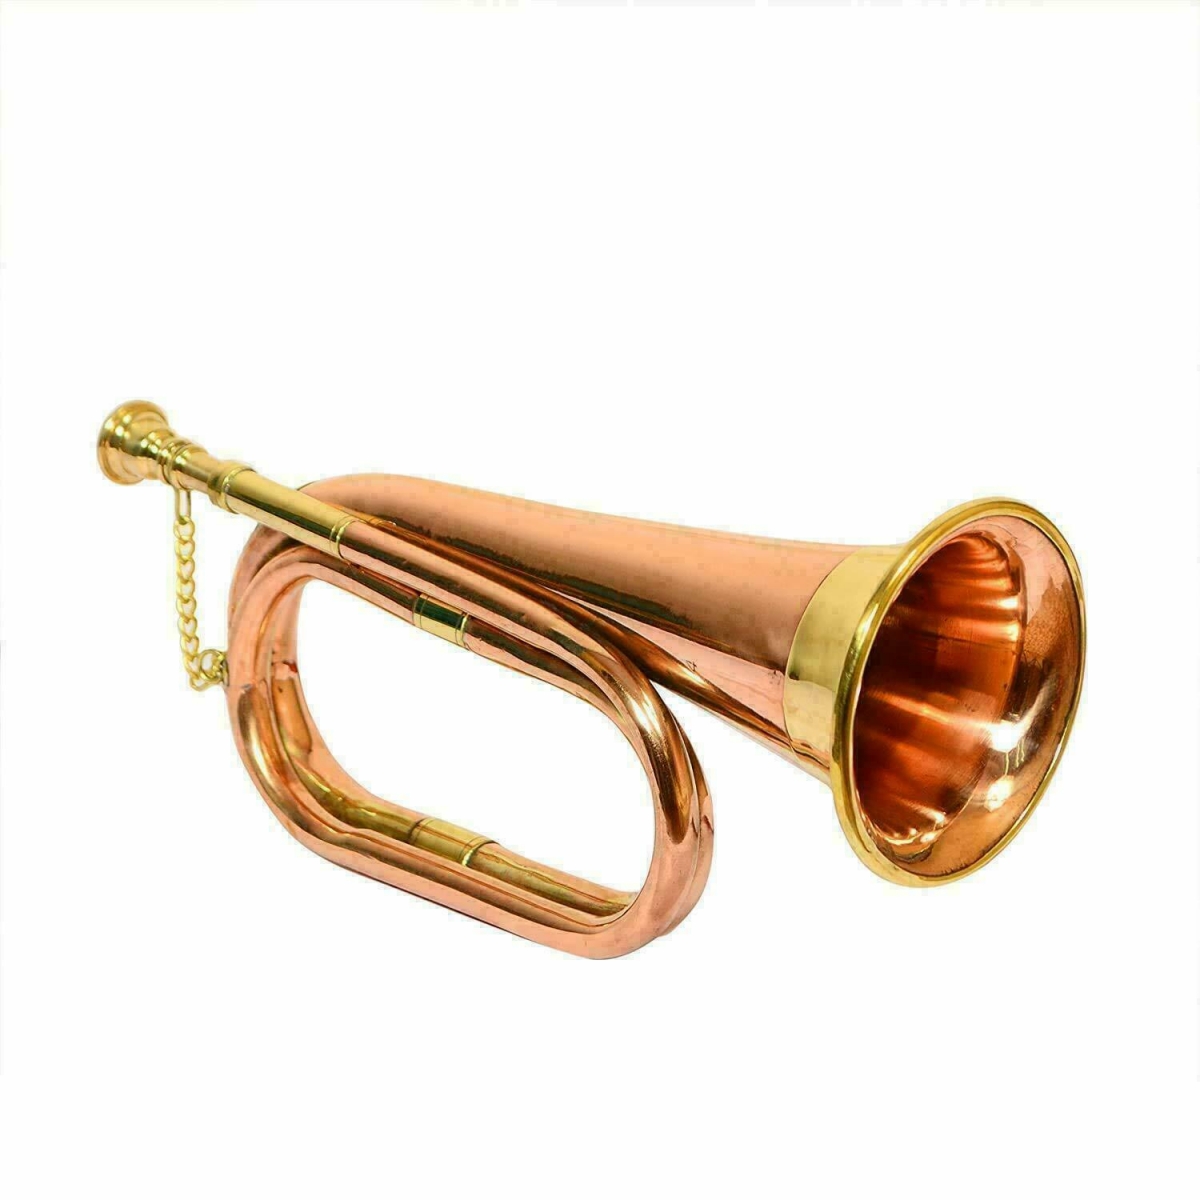 Bb Regulation bugle standard model copper made, heavy gauge